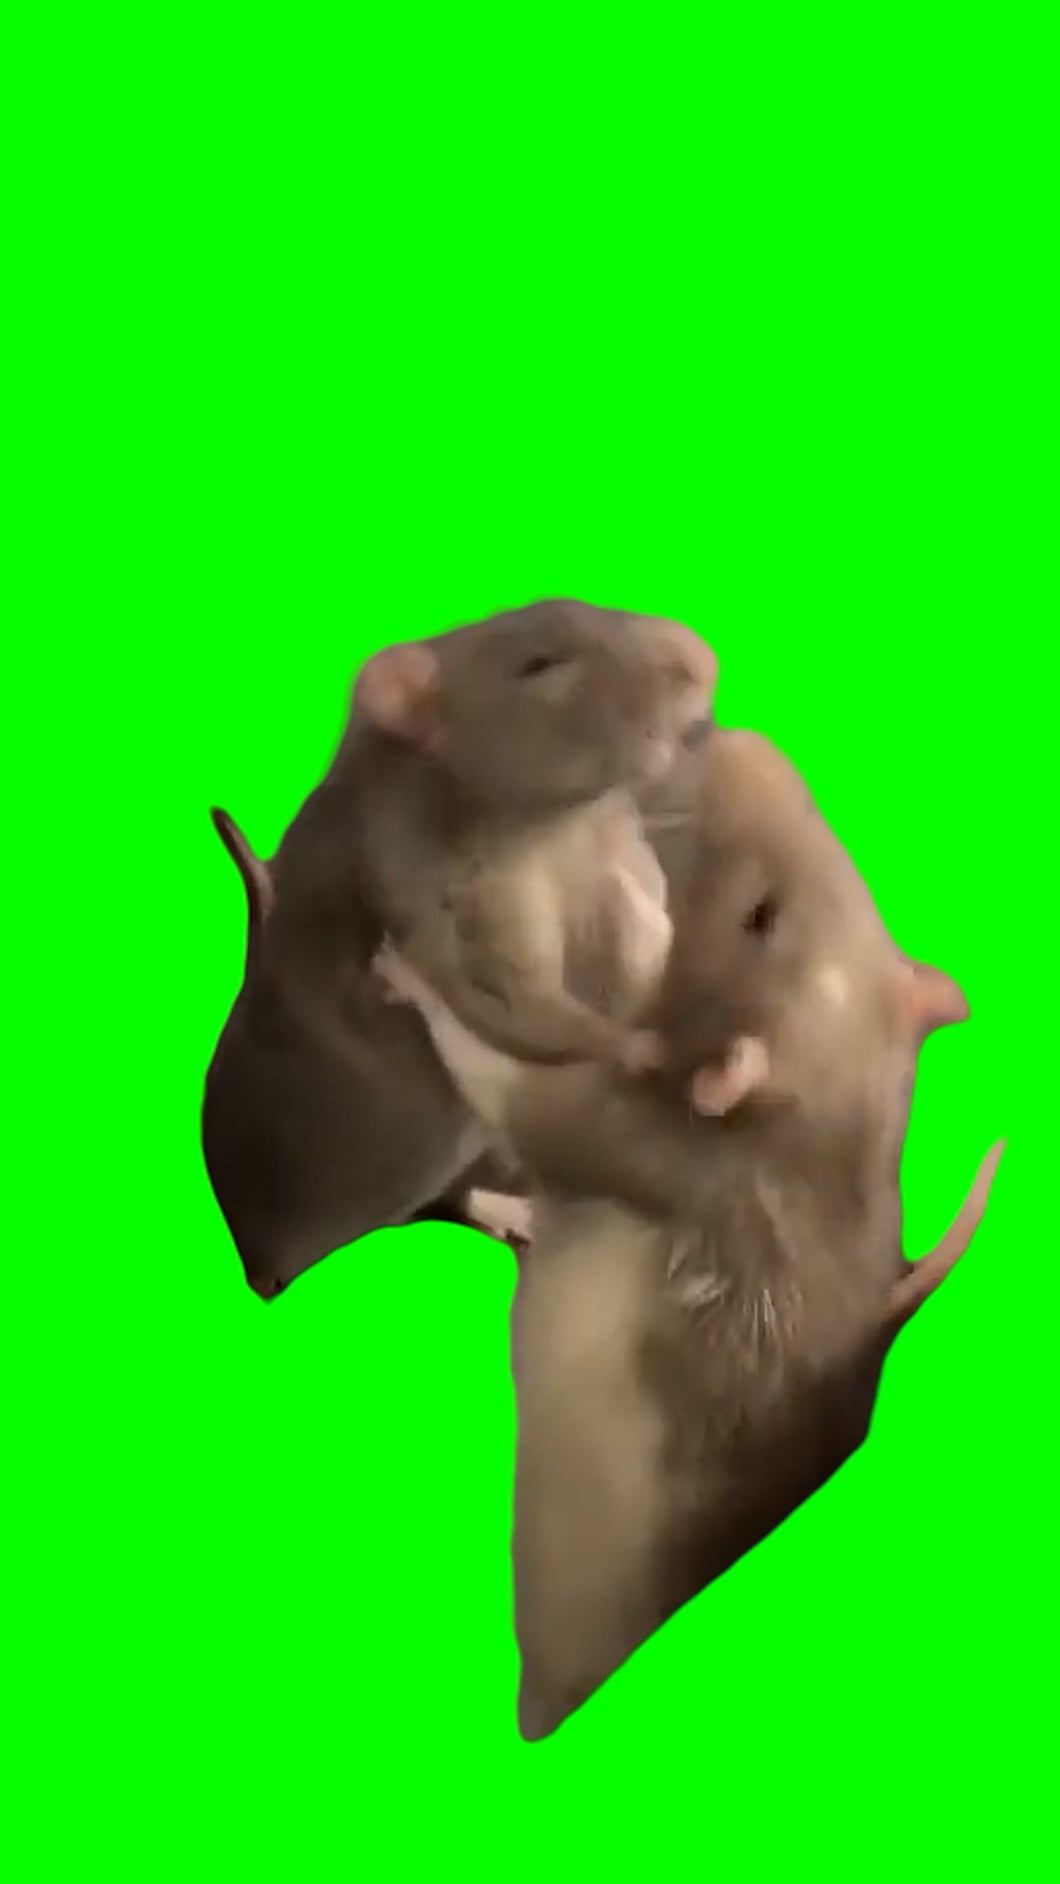 Rats Fighting (Green Screen)